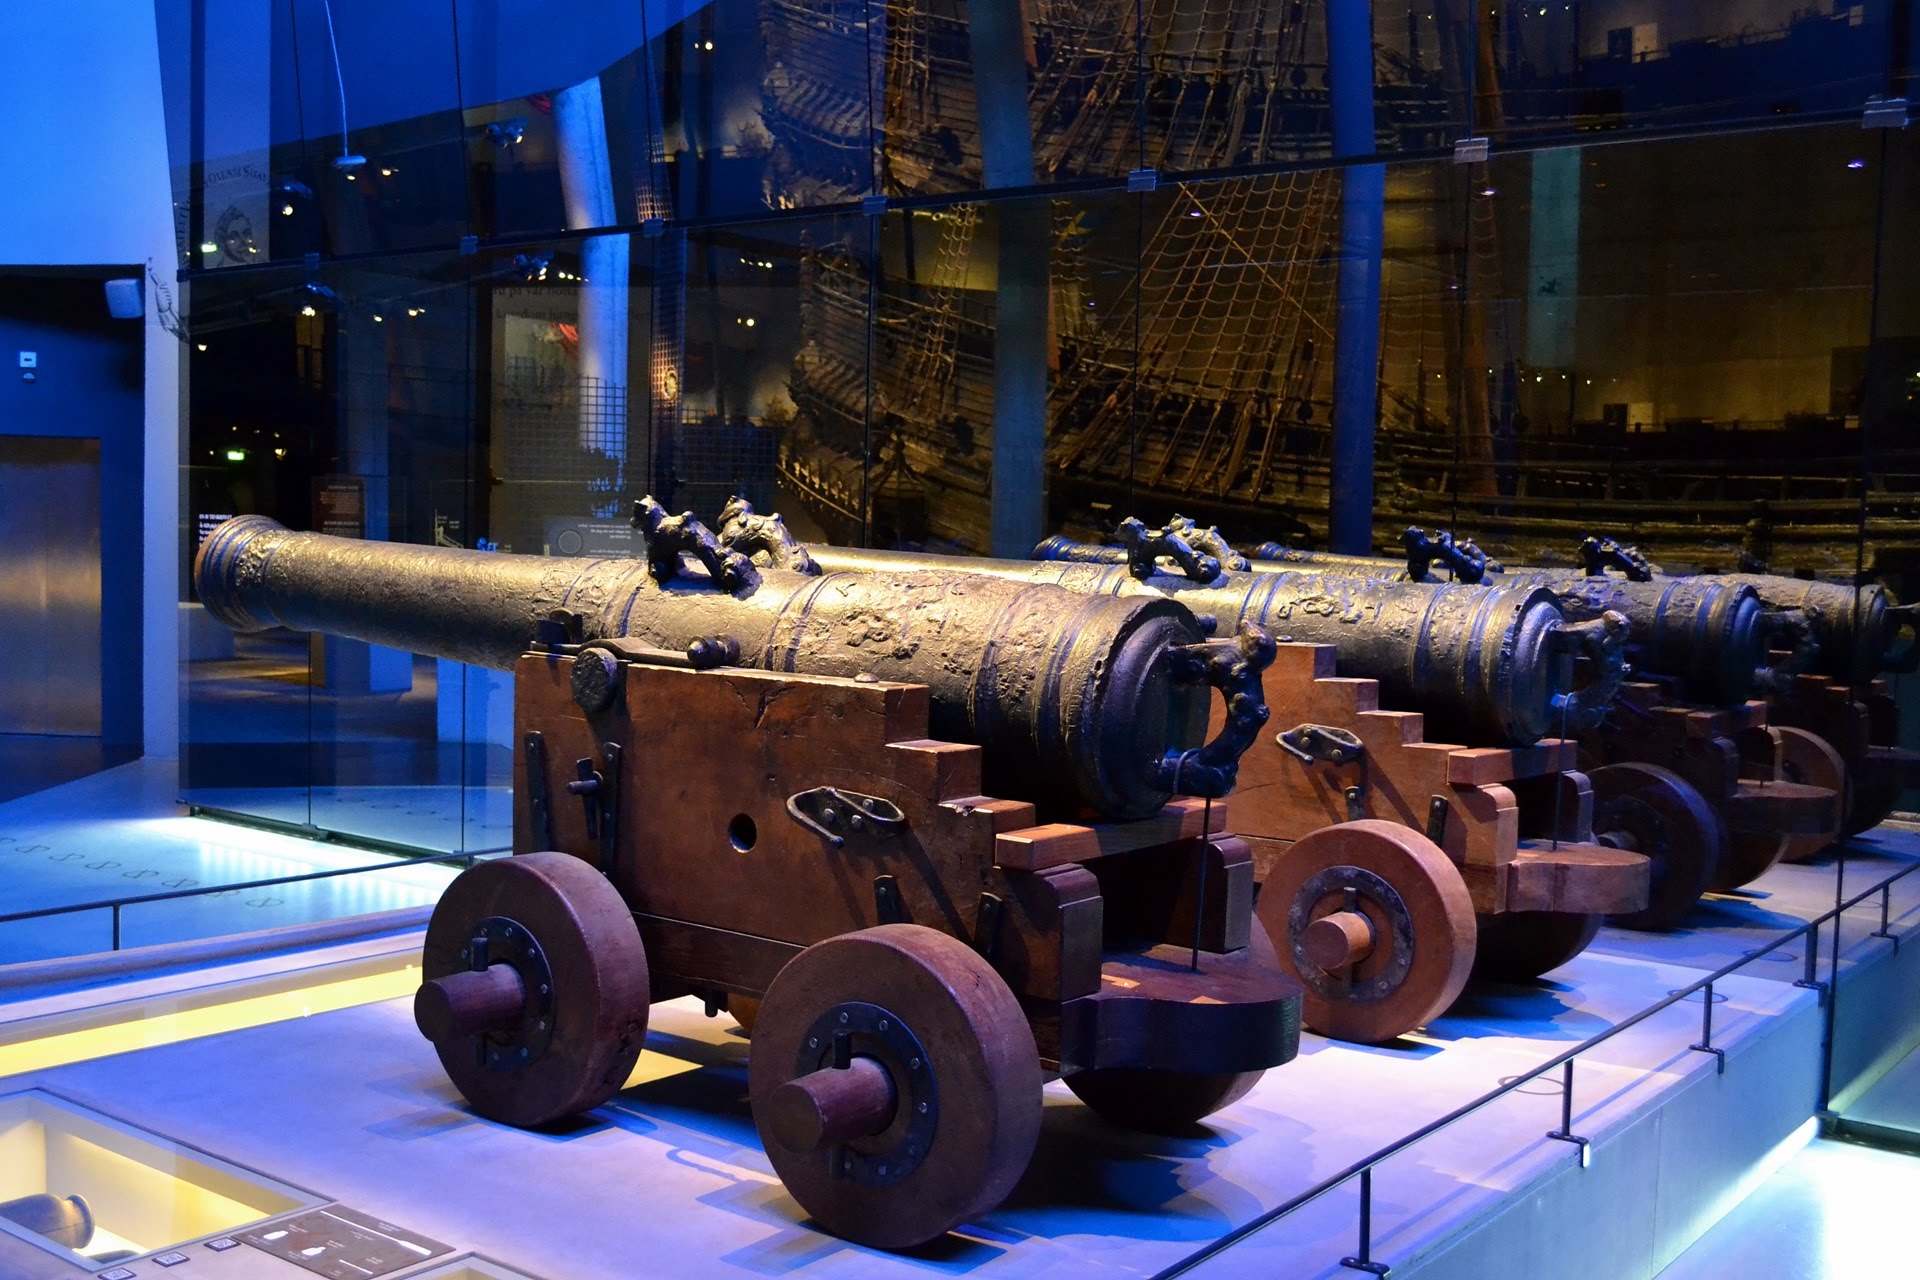 The History Blog » Blog Archive » Replica of Vasa bronze cannon shot